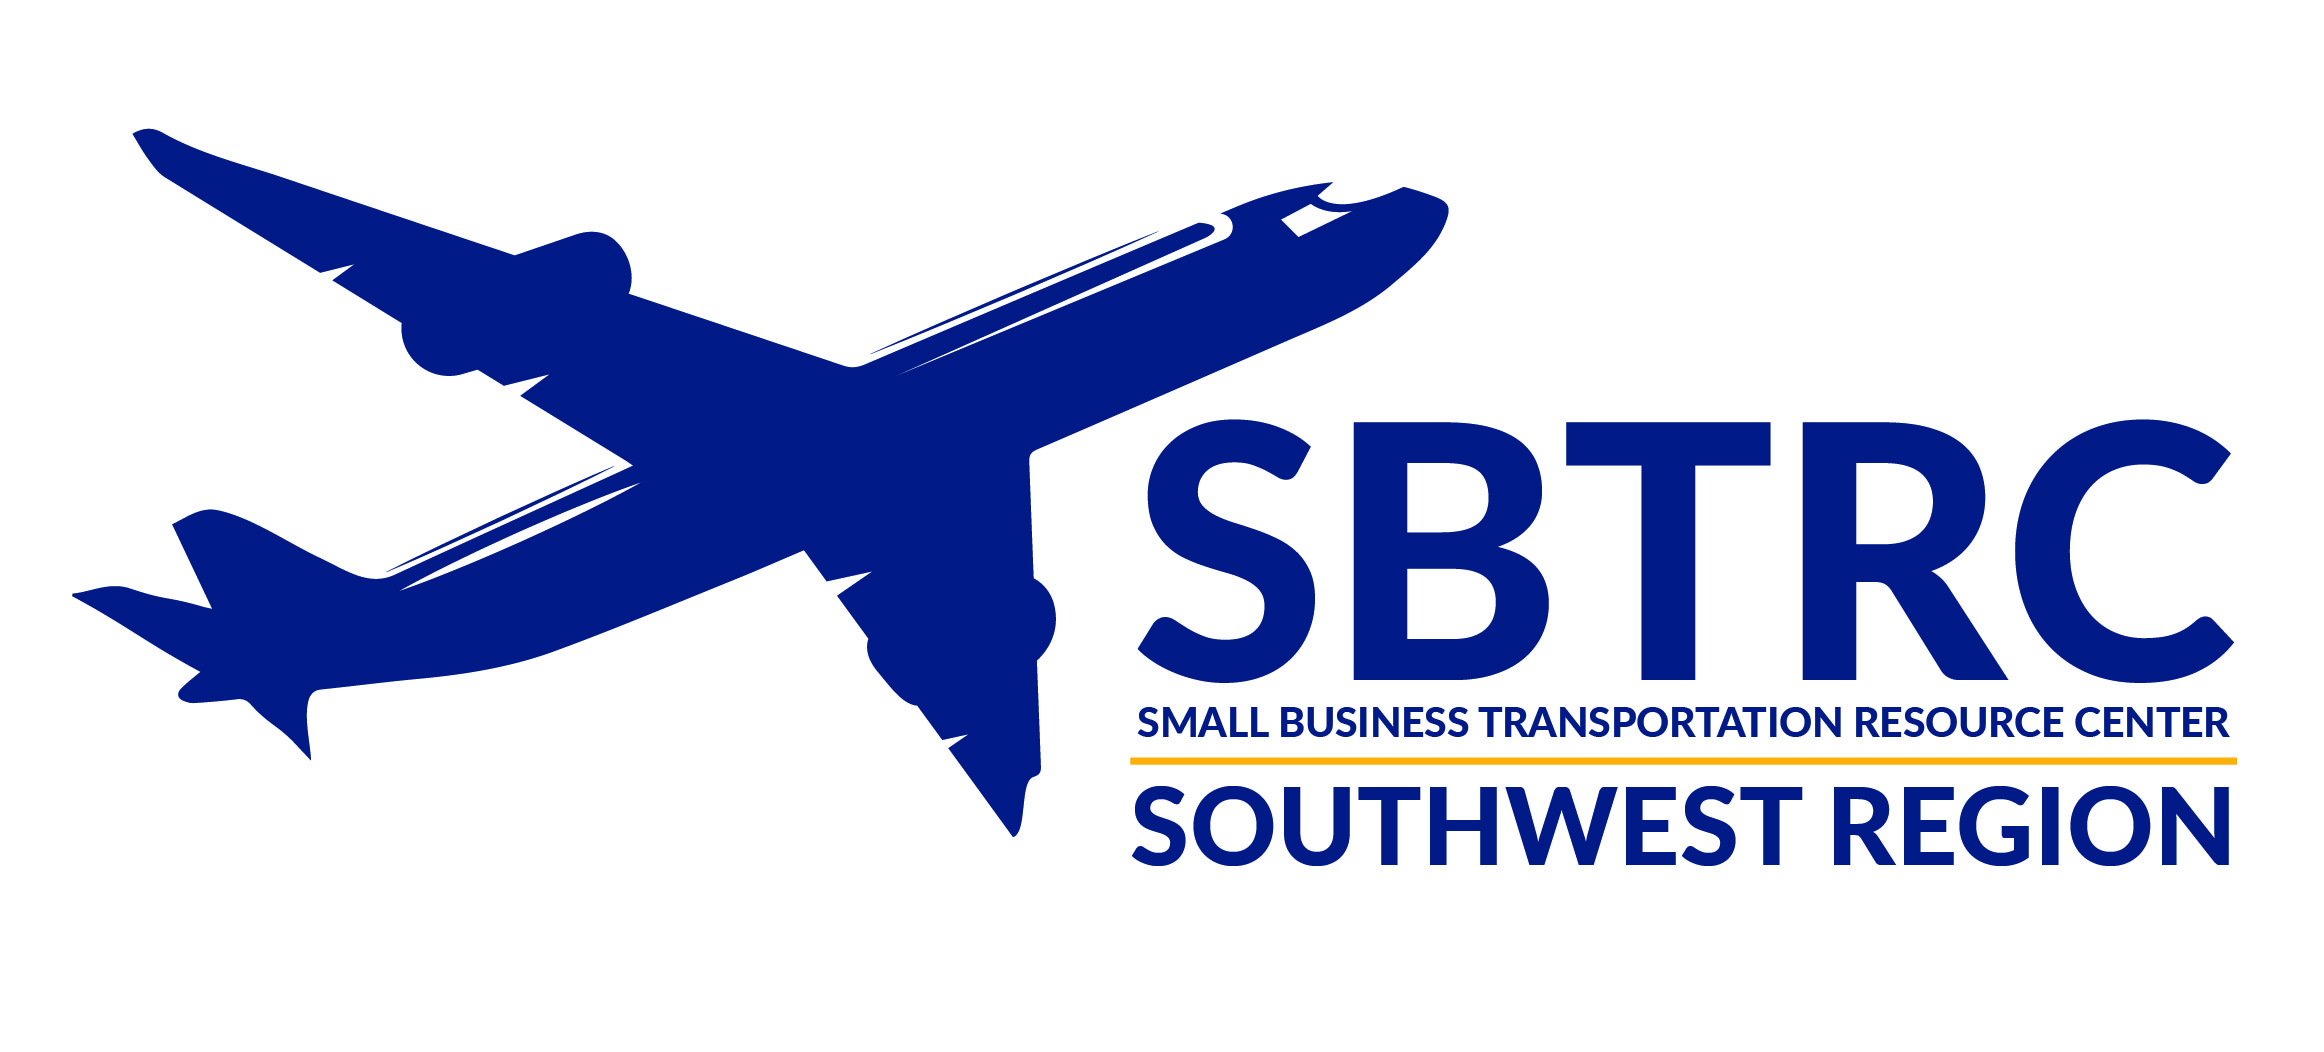 Small Business Transportation Resource Center - Southwest Region